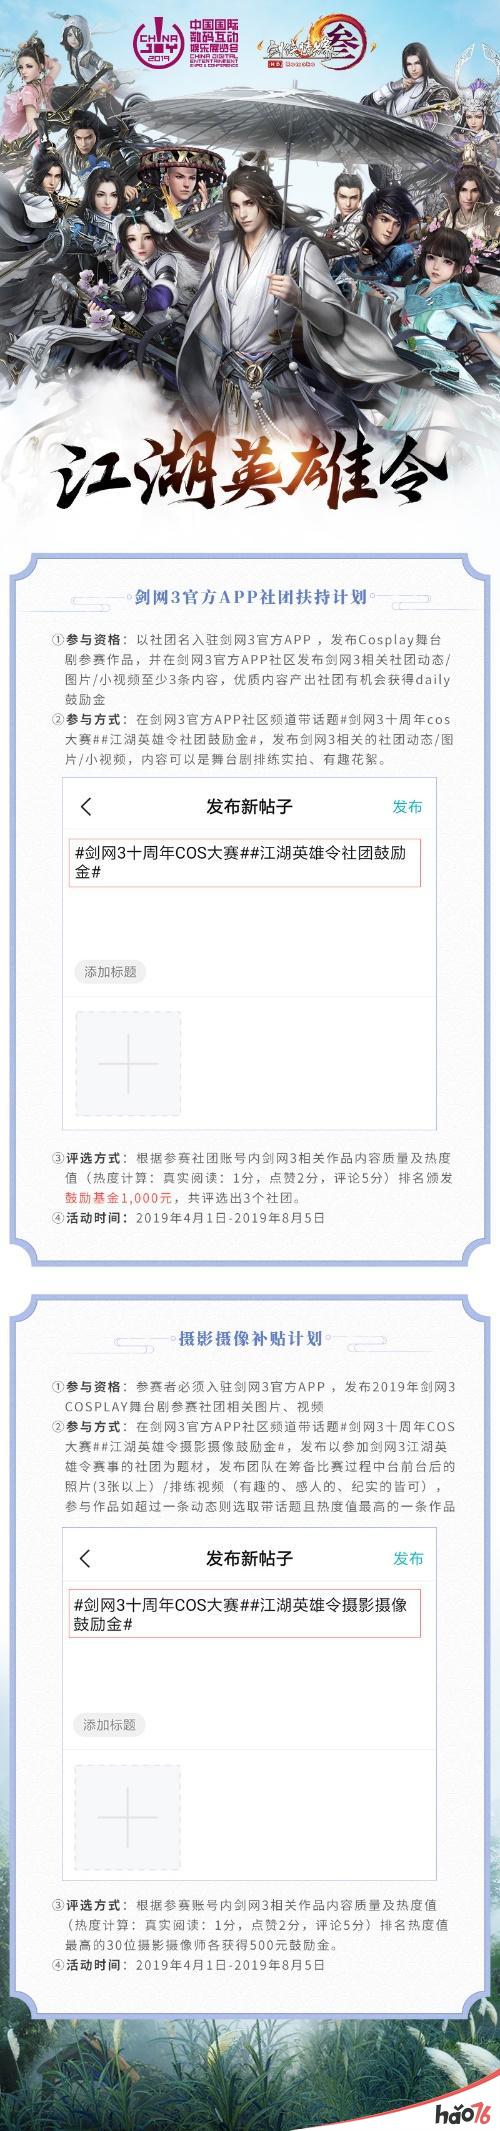 ChinaJoy携手剑网3再次召集“江湖英雄令”!